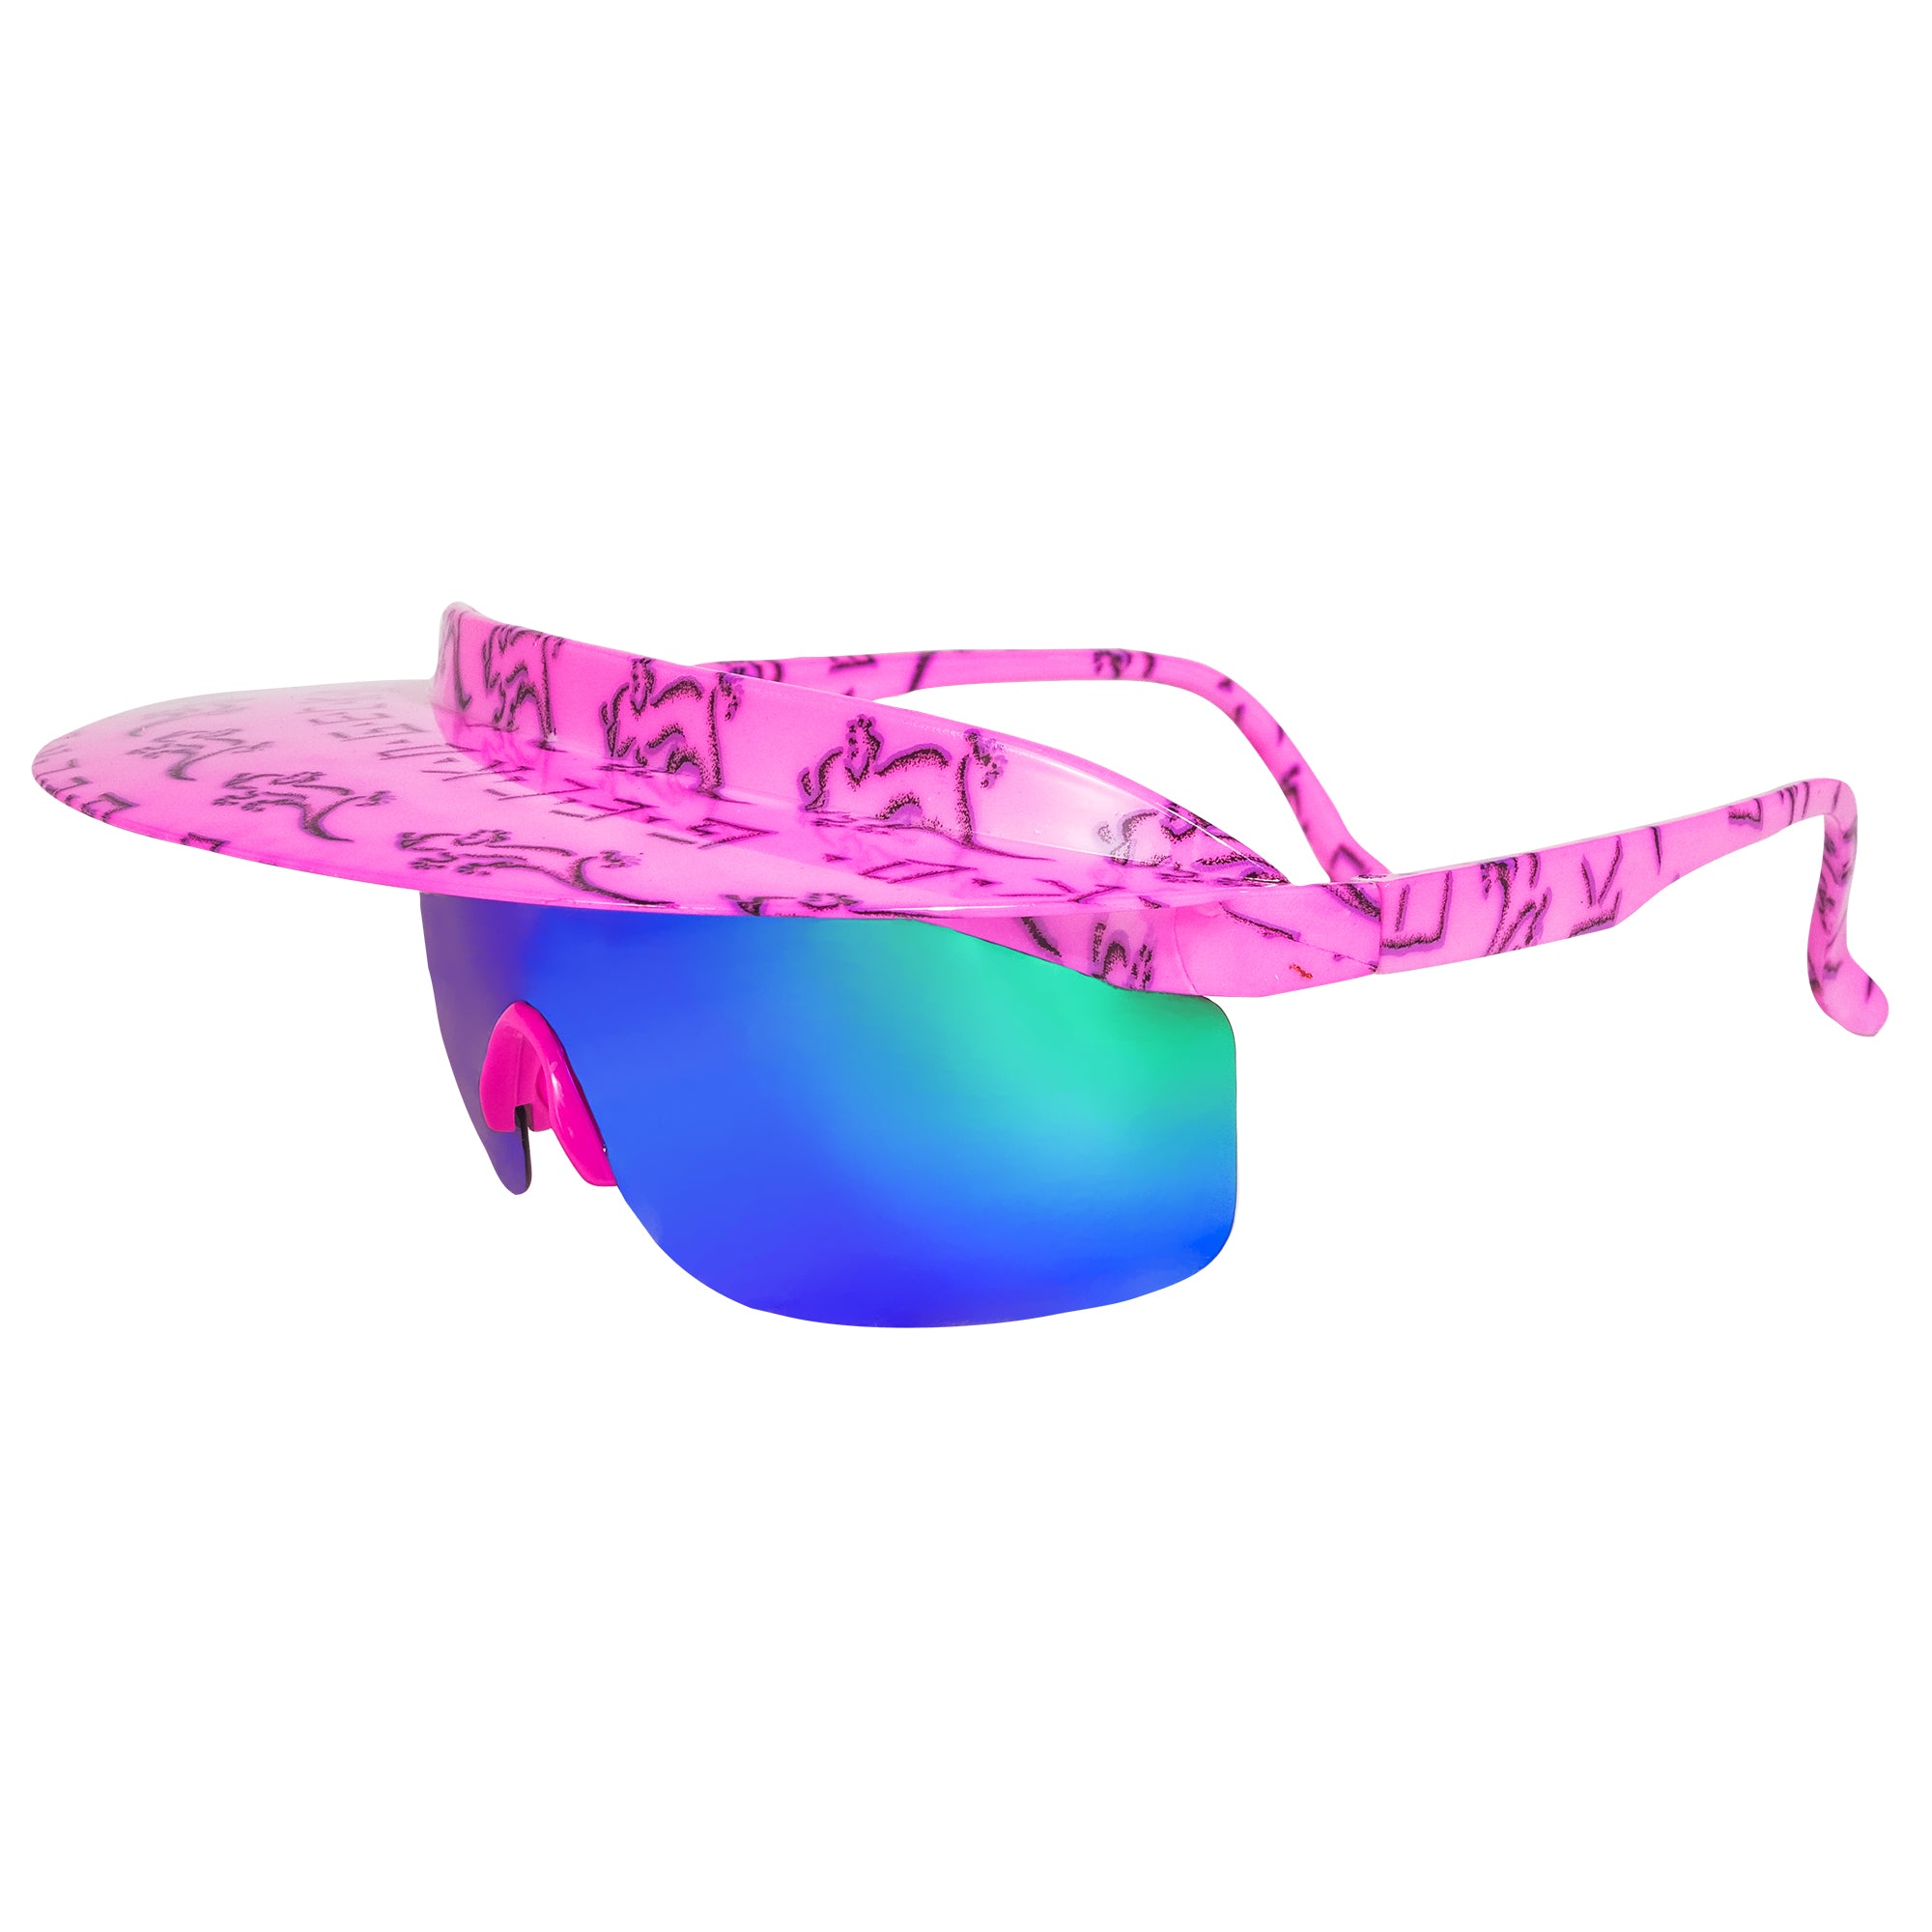 Pink Petro Gecko Hawaii 80s retro Vintage visor shades sunglasses. Polarized UV 400 gecko Hawaii clothing 90s pink with blue lens visor shade sunglasses from the boats to the slopes. B Fresh Gear